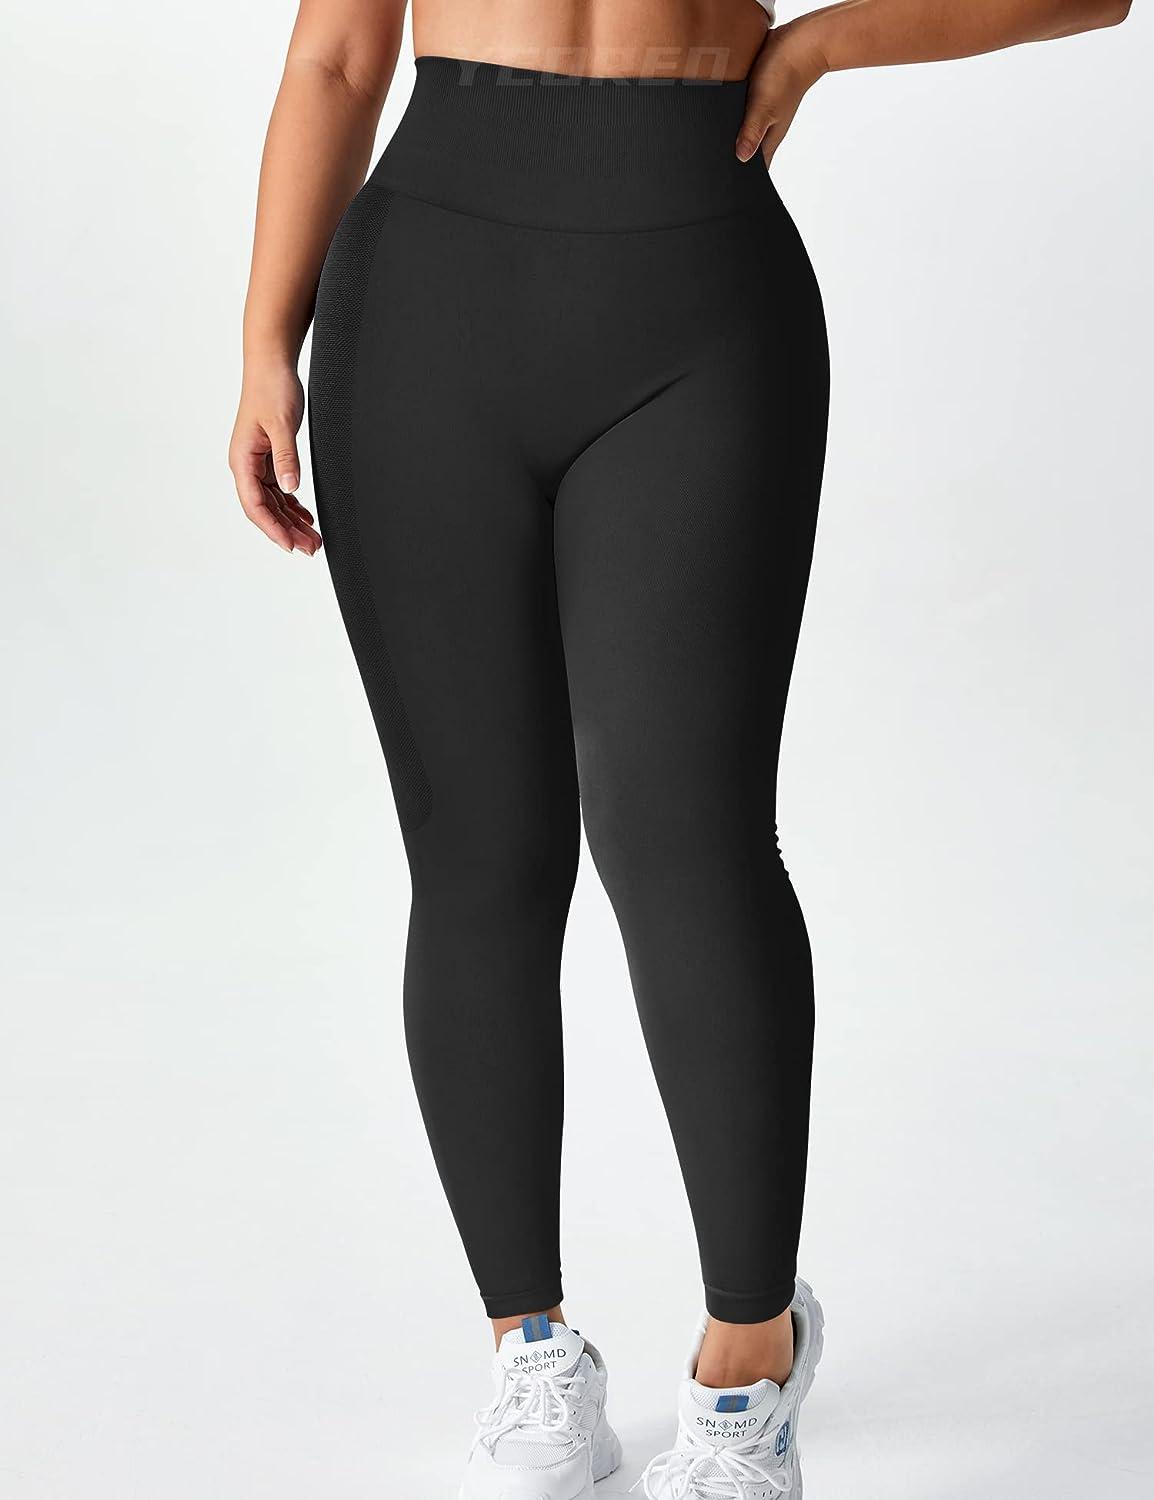 YOFIT Women High Waist Butt Lifting Workout Gym Leggings Scrunch Booty Anti  Cellulite Tummy Control Yoga Pants #0 Black M : : Clothing, Shoes  & Accessories